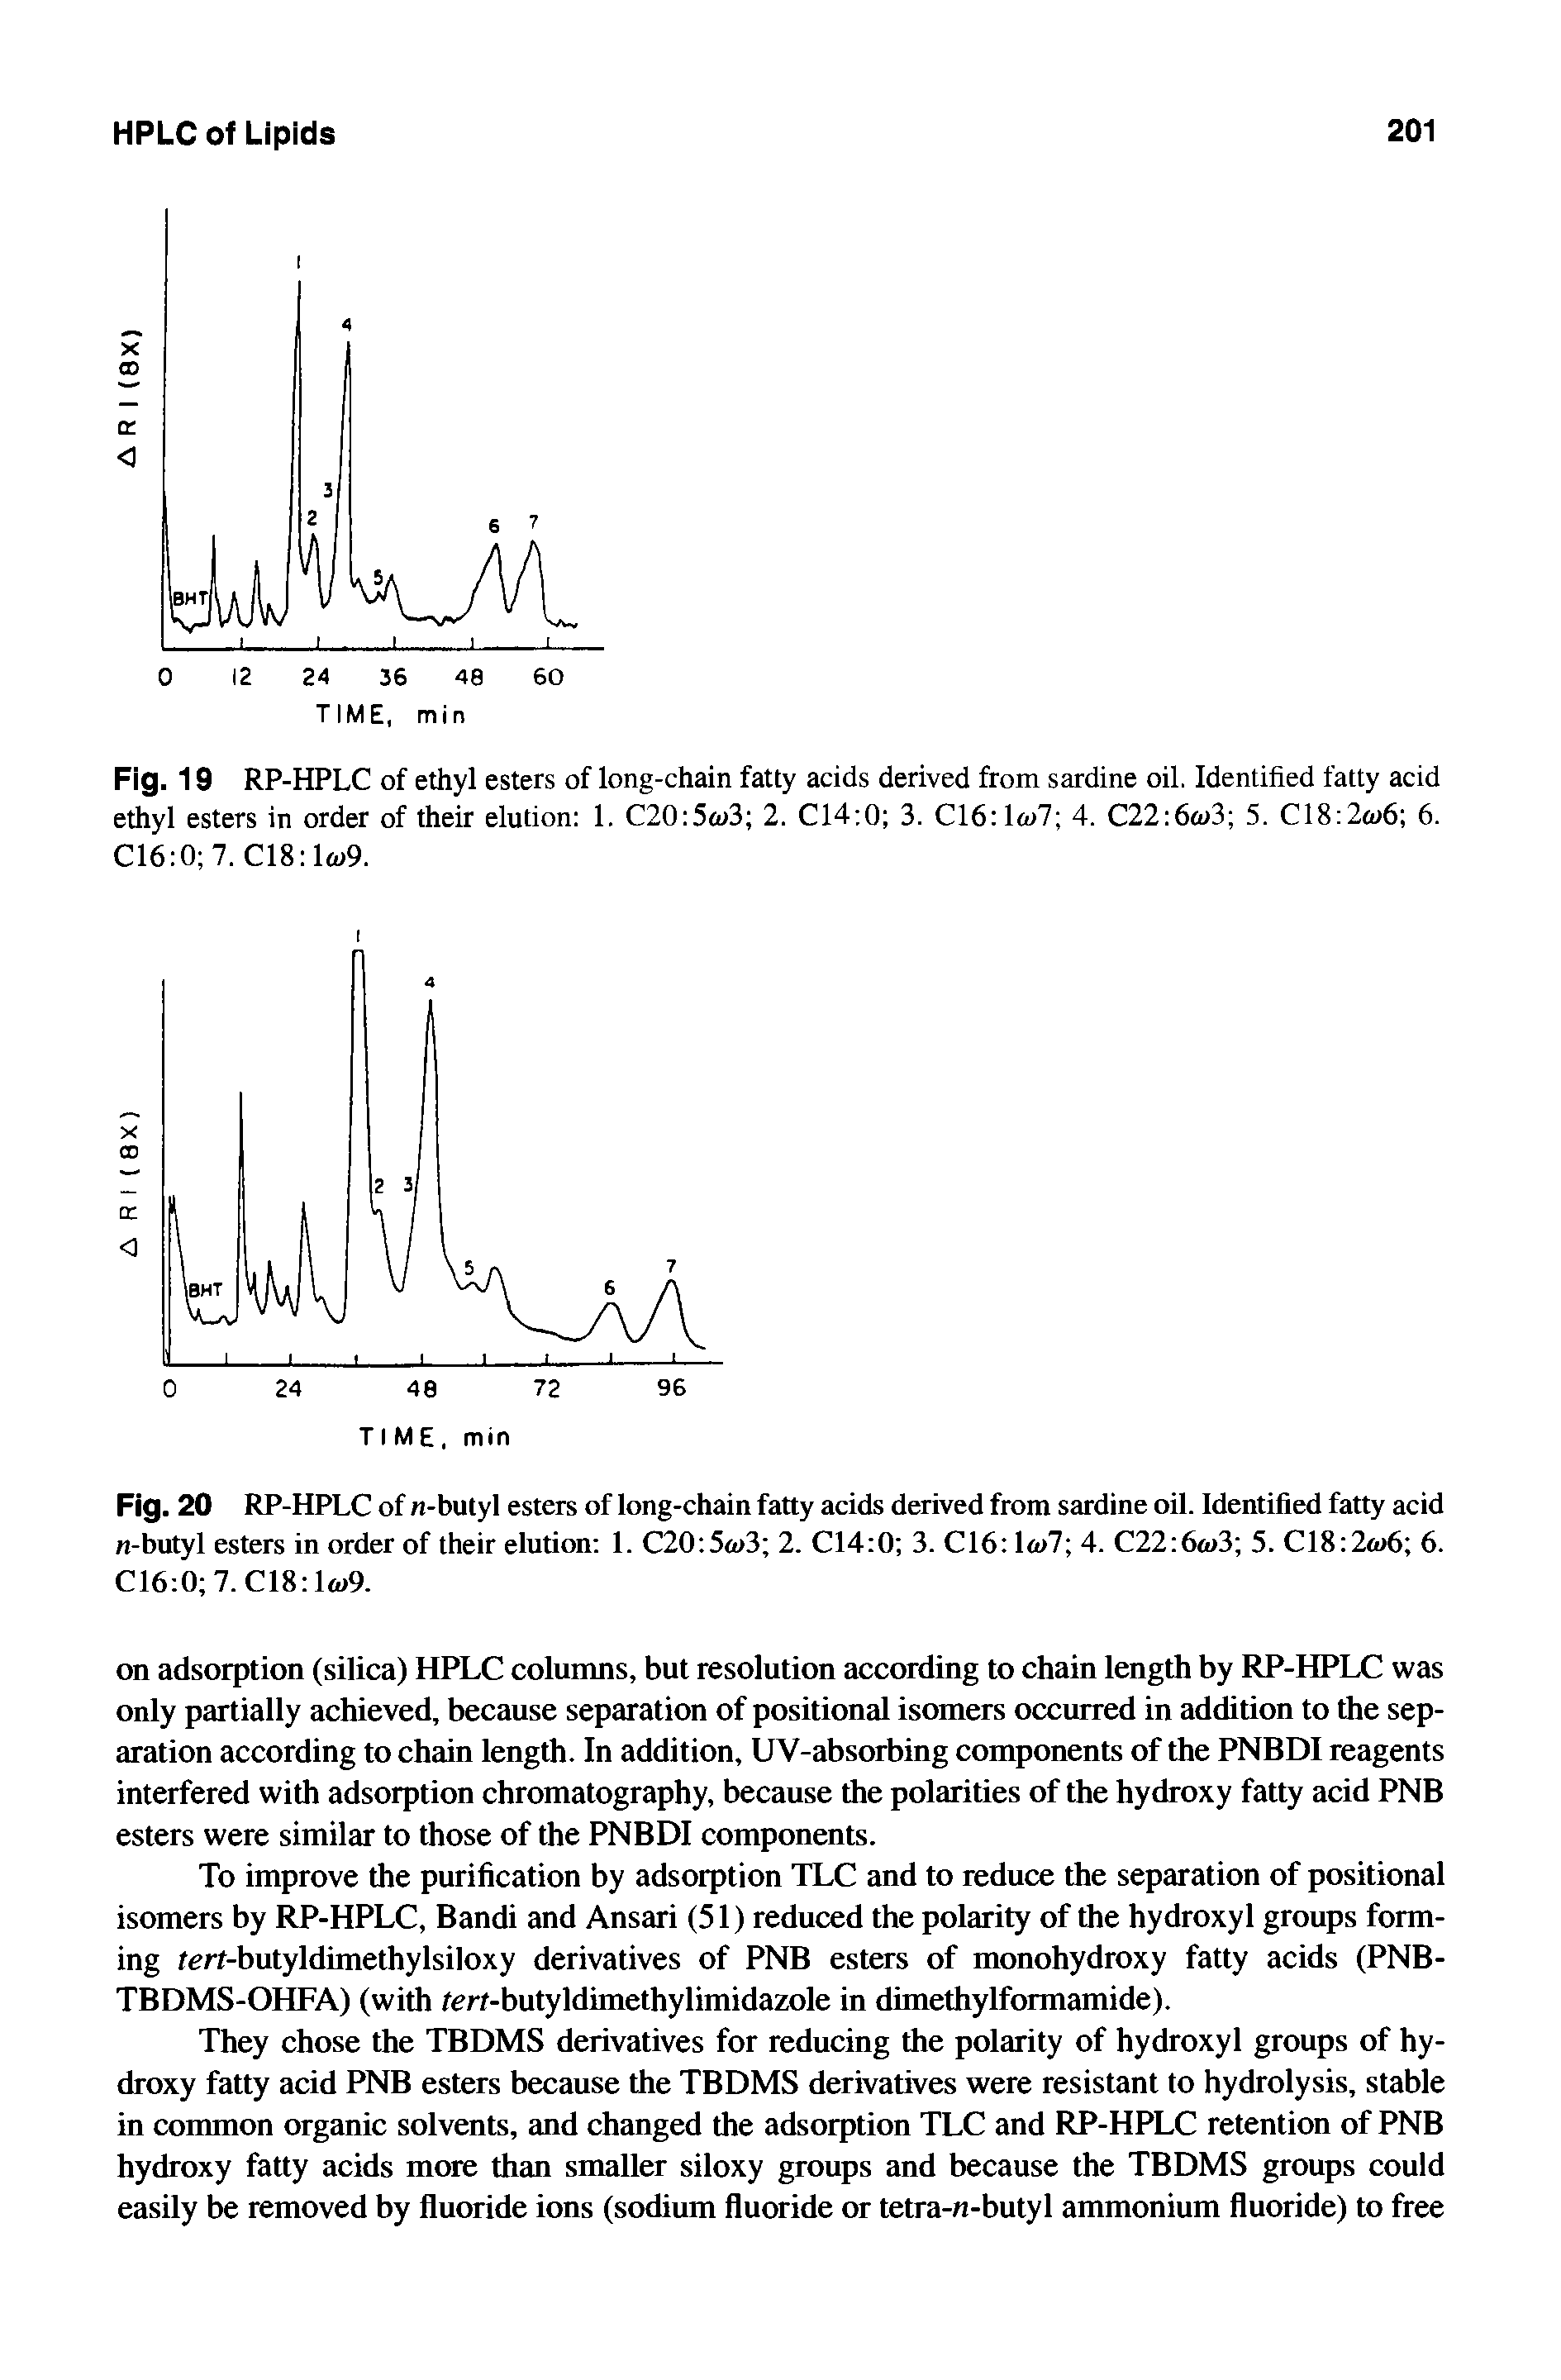 Fig. 19 RP-HPLC of ethyl esters of long-chain fatty acids derived from sardine oil. Identified fatty acid ethyl esters in order of their elution 1. C20 5w3 2. 04 0 3. C16 lw7 4. C22 6w3 5. C18 2w6 6. 06 0 7. C18 lw9.